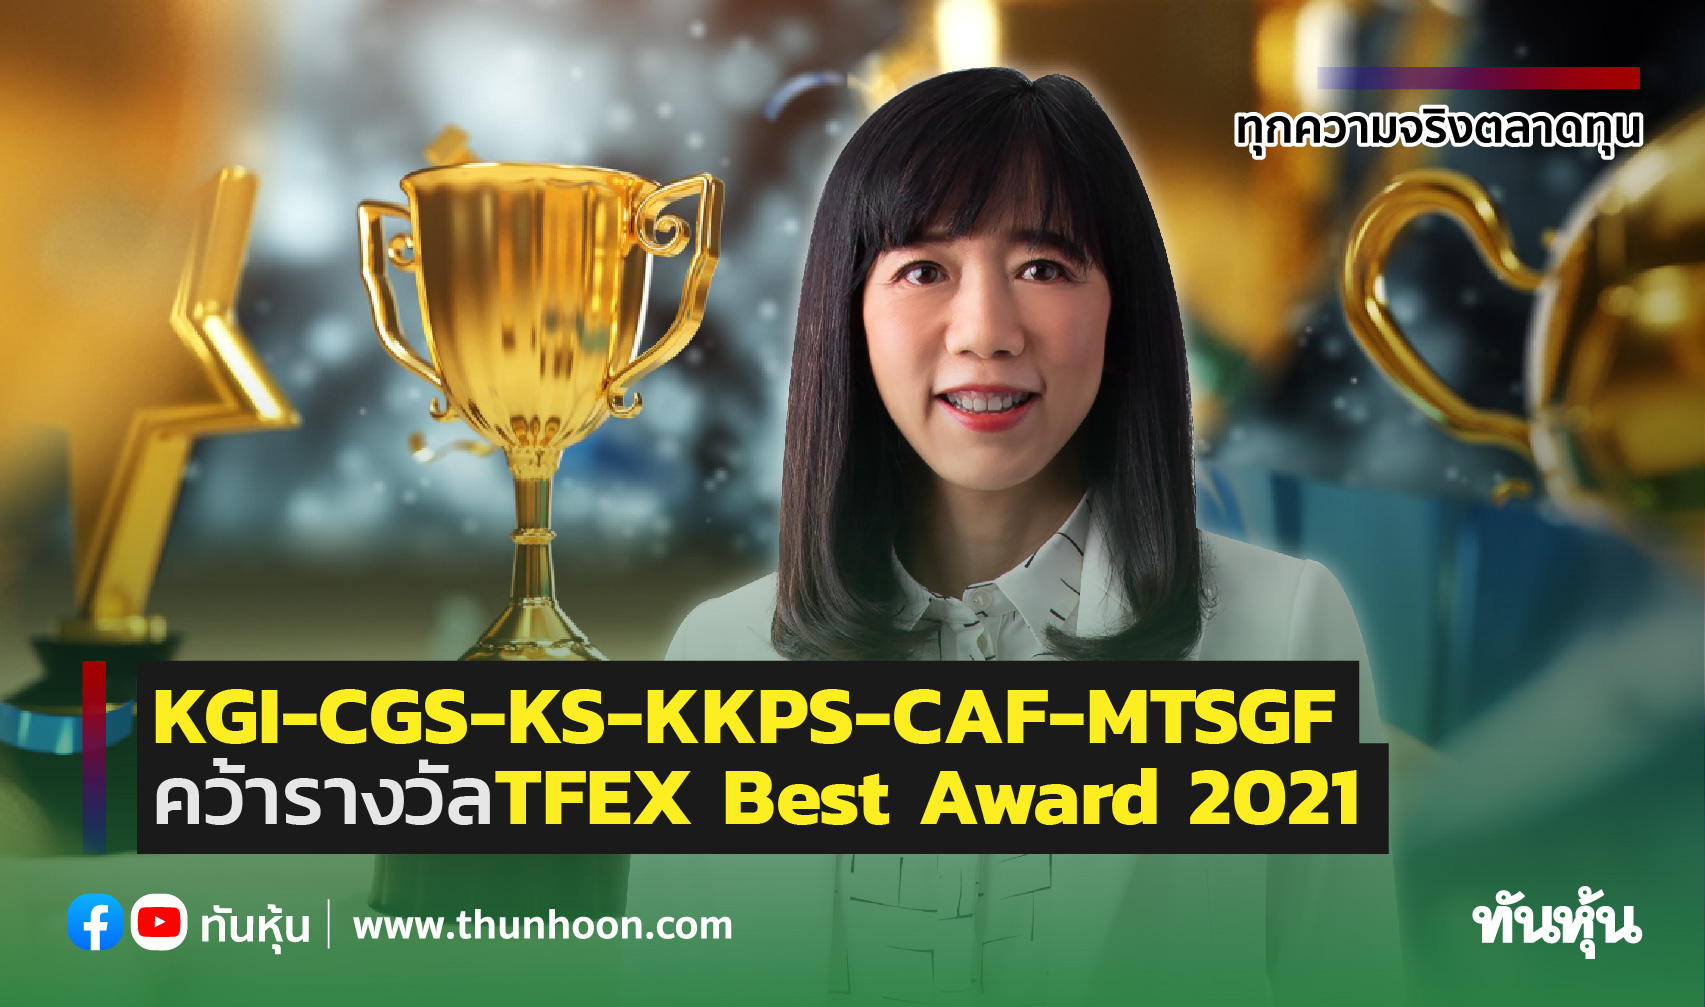 KGI-CGS-KS-KKPS-CAF-MTSGF คว้ารางวัลผลงานโดดเด่น TFEX Best Award 2021